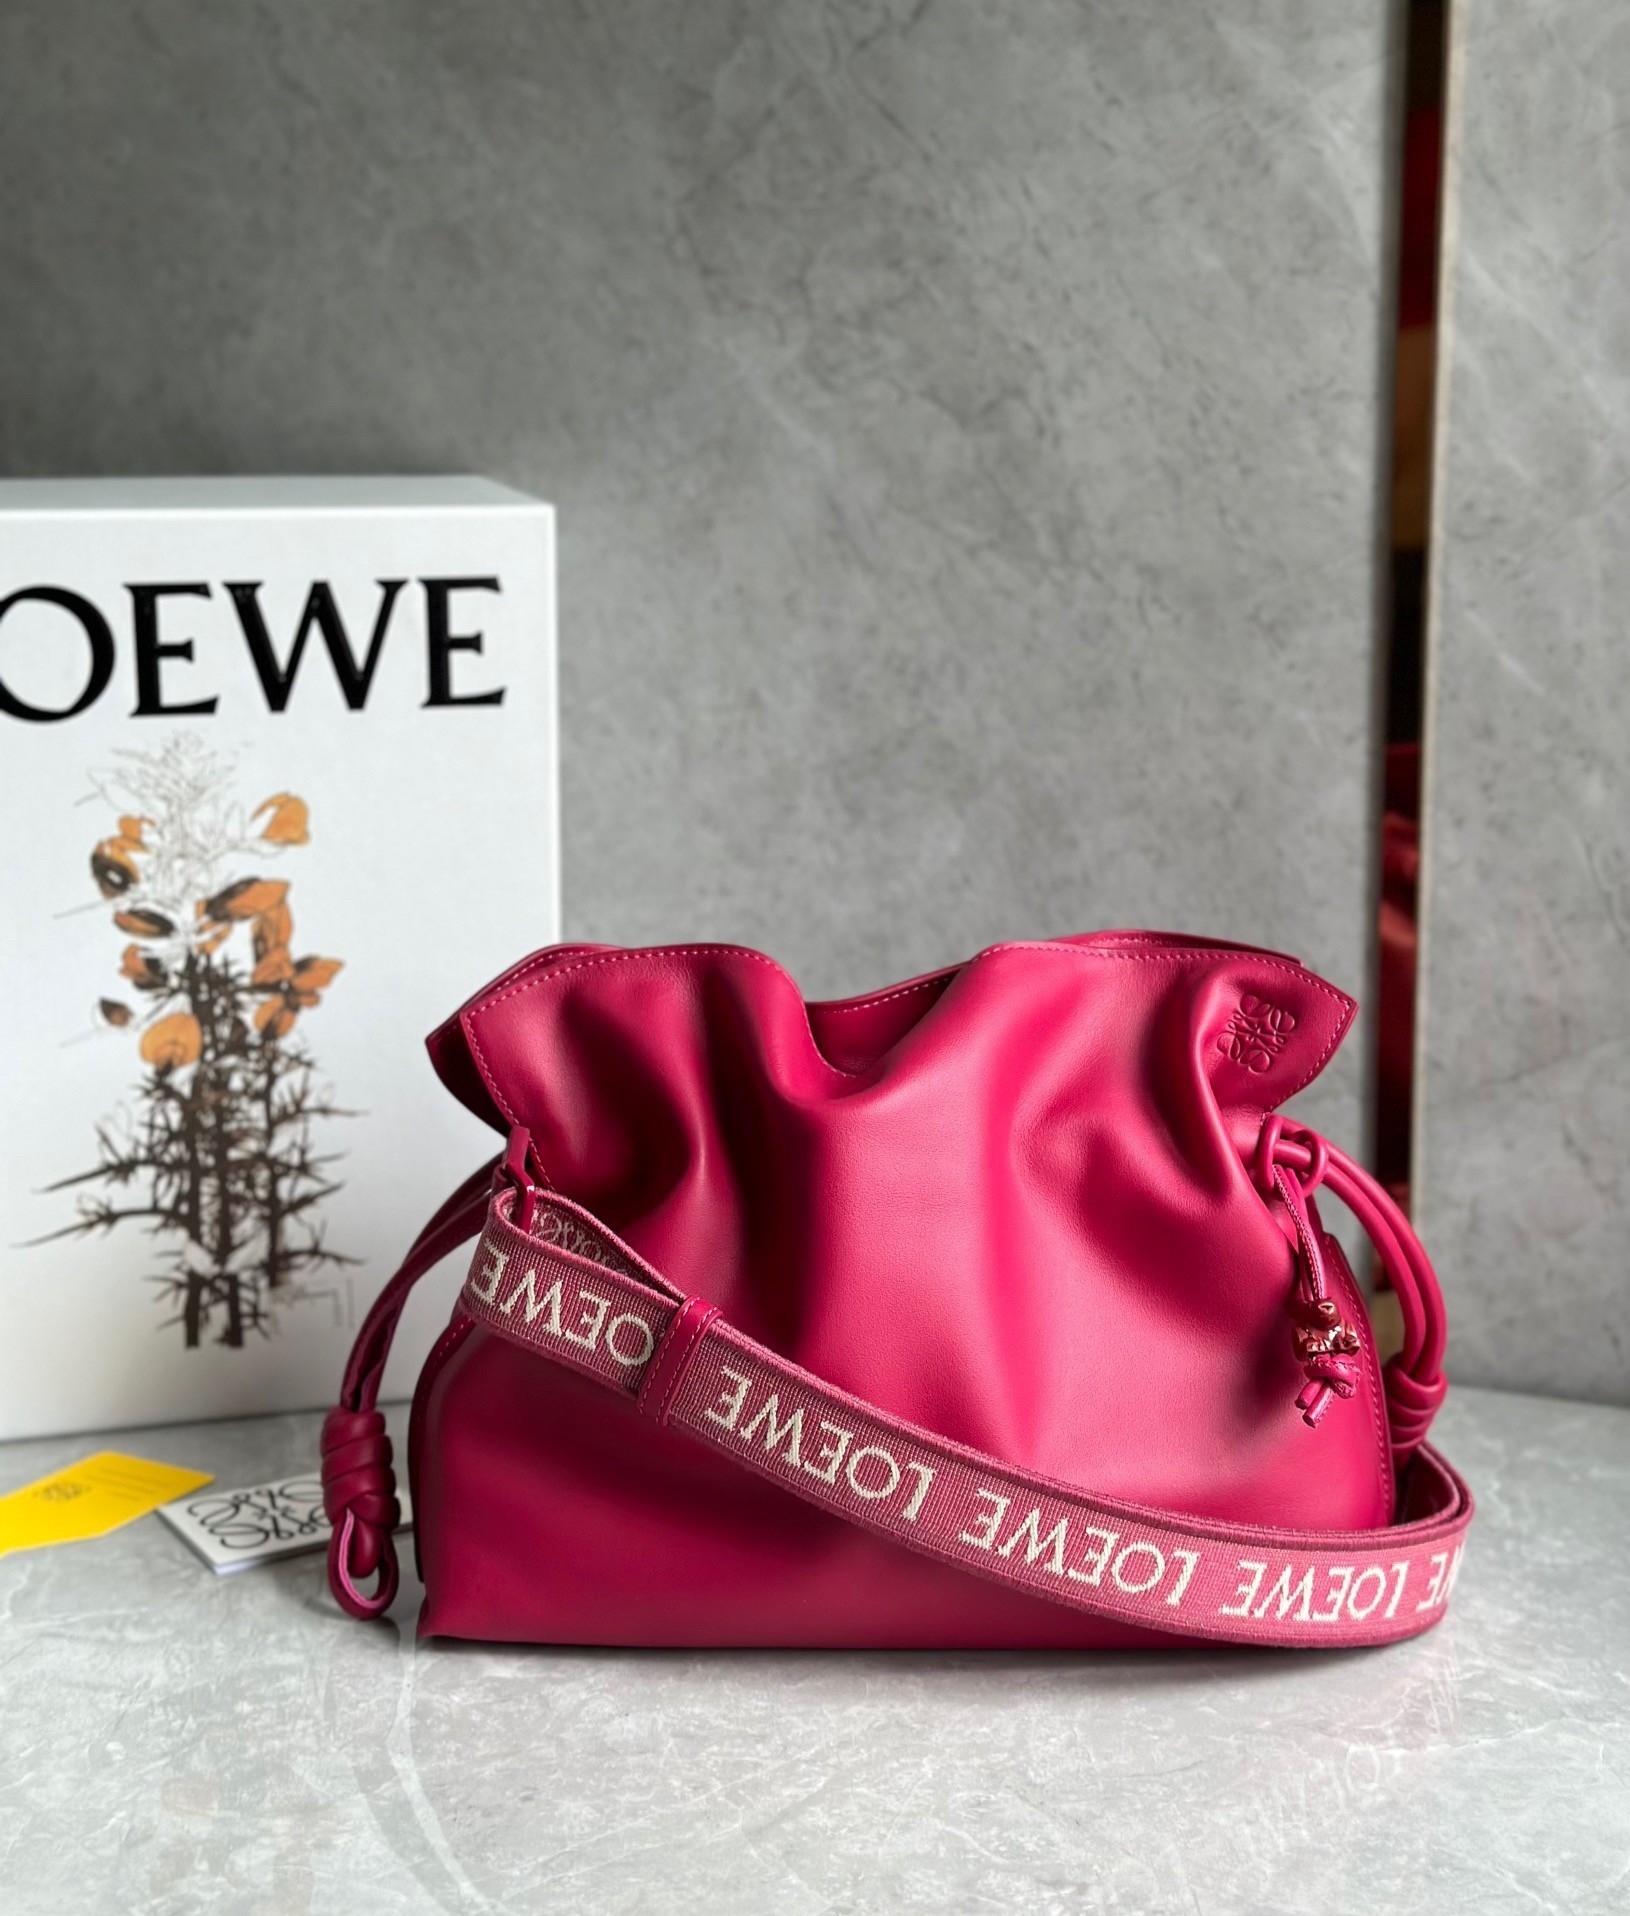 Loewe Flamenco Clutch Bag In Ruby Red Leather 795